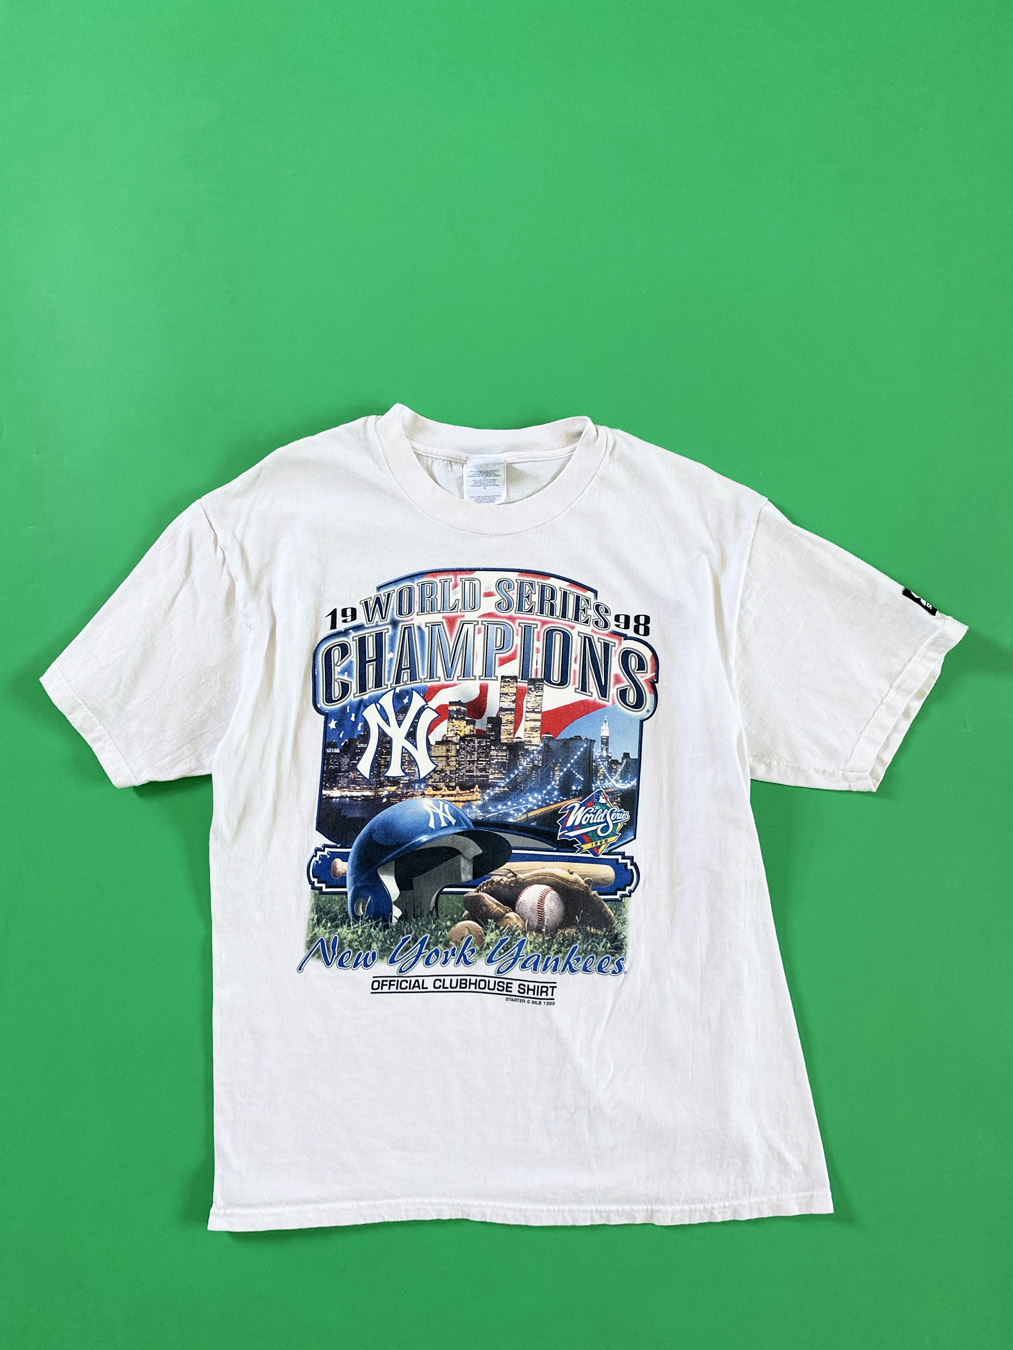 New York Yankees 1998 World Series Champions Shirt - High-Quality Printed  Brand